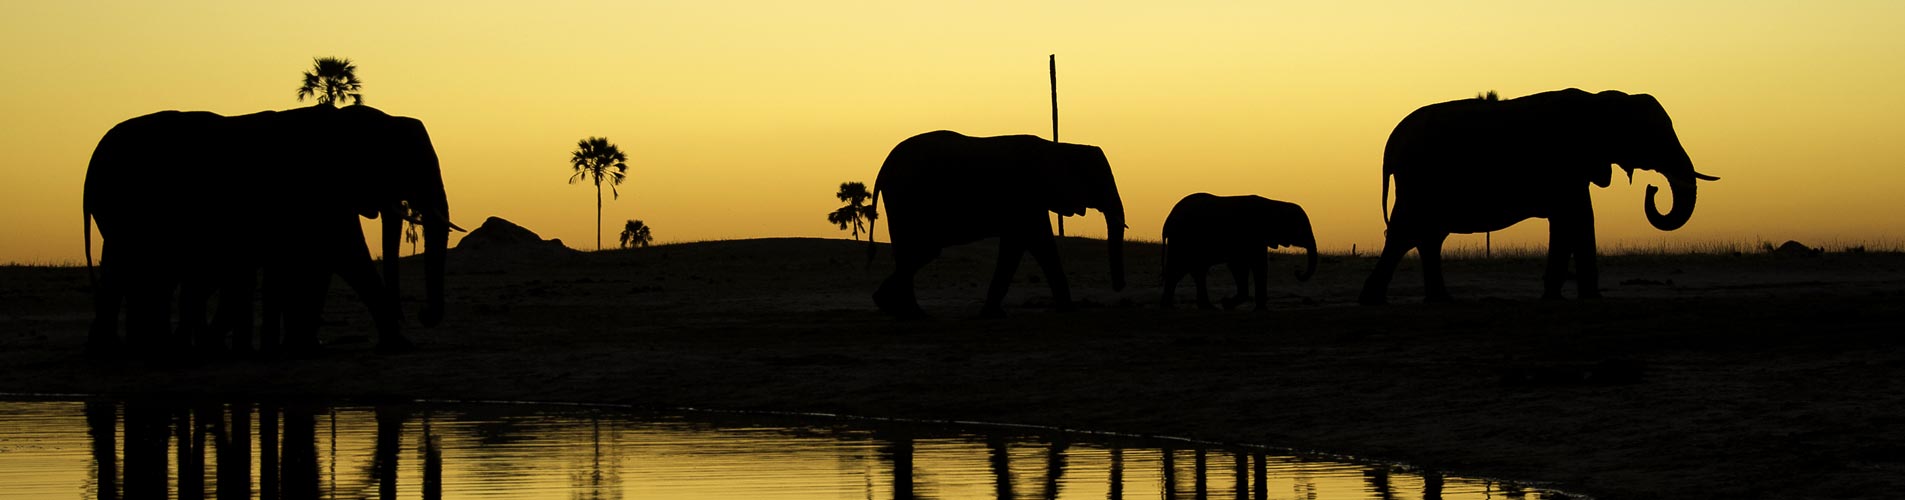 Elephants on African Safari